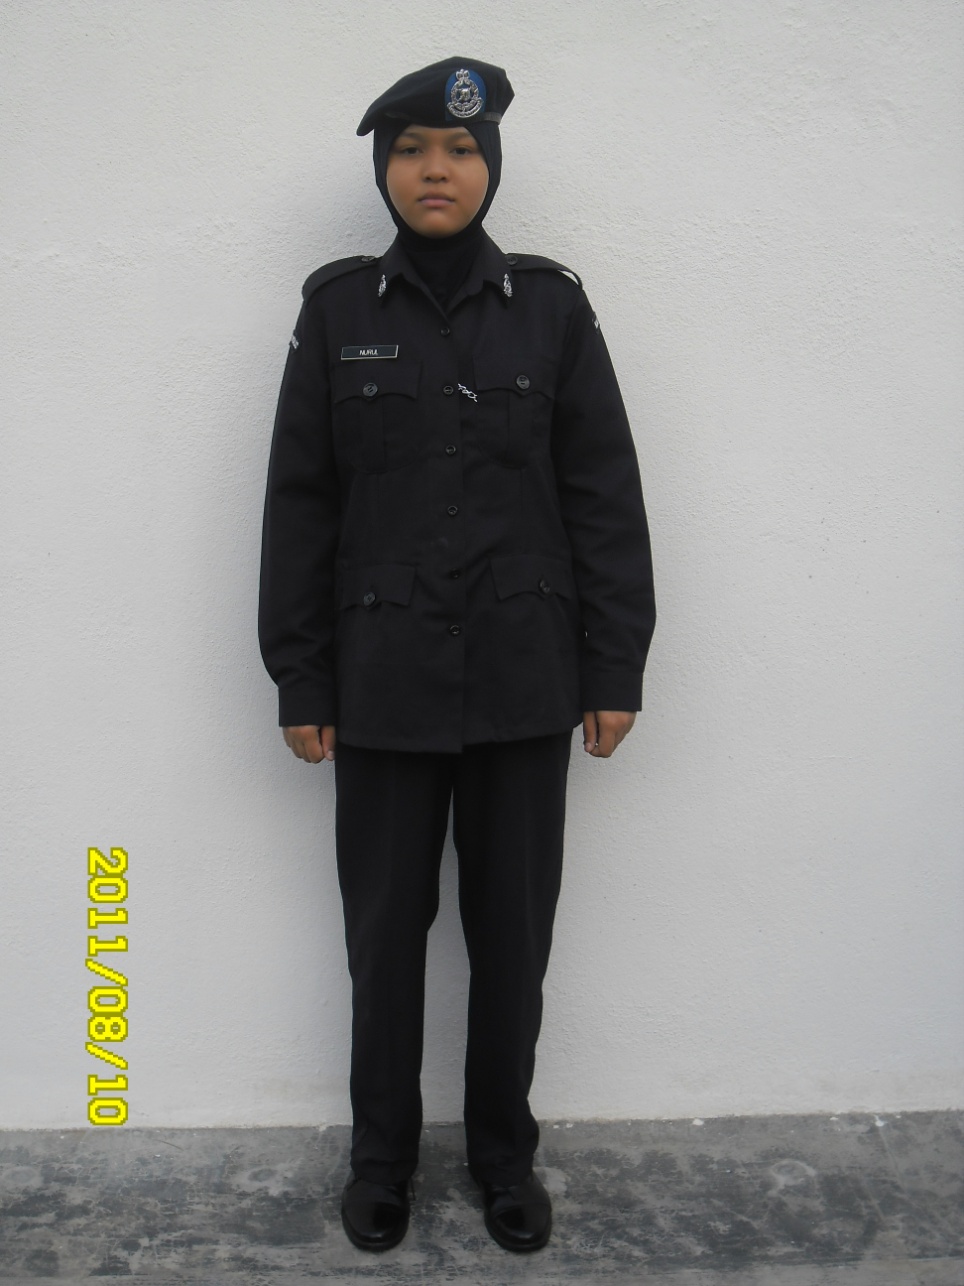 Kadet Polis SMKDI Uniform